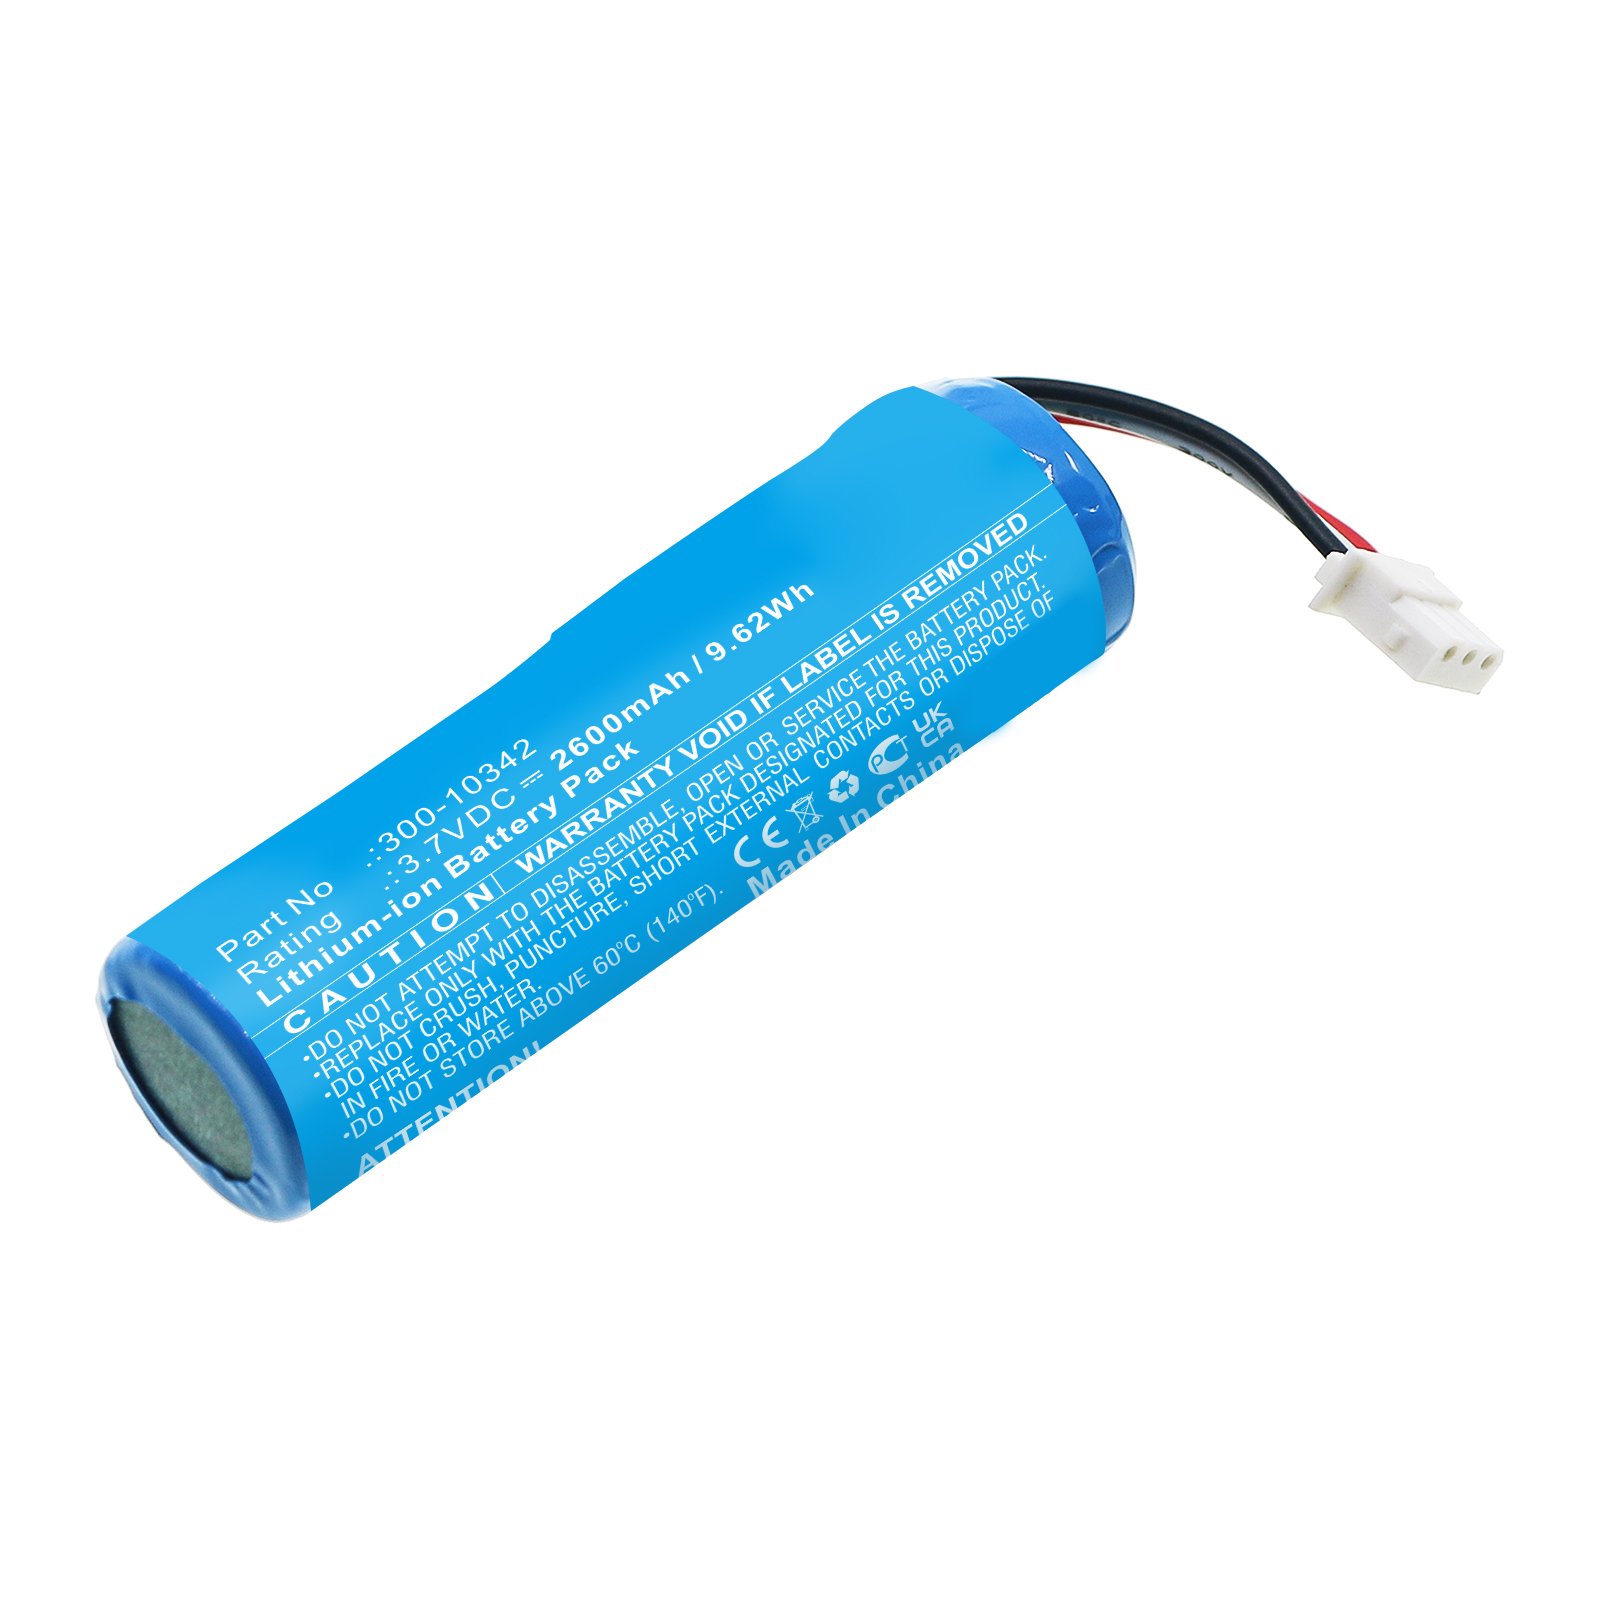 Synergy Digital Alarm System Battery, Compatible with Honeywell 300-10342 Alarm System Battery (Li-ion, 3.7V, 2600mAh)